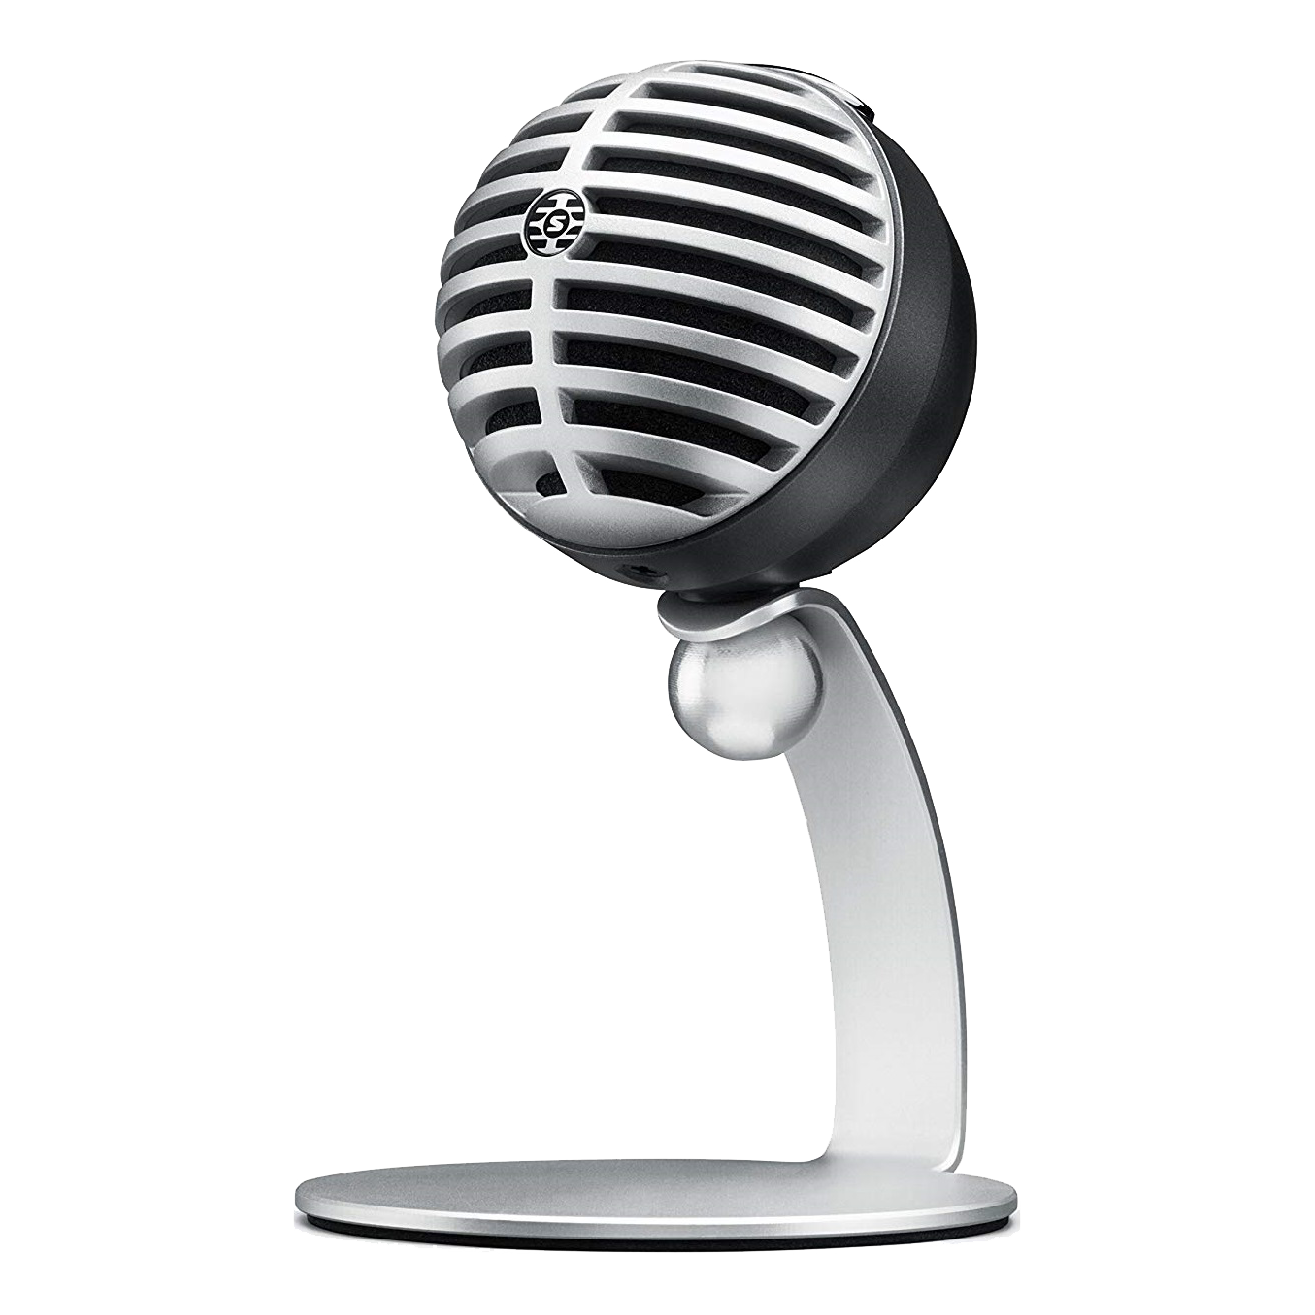 Shure MV5 Digital Condenser Microphone for Mac, PC, iPhone, iPod and iPad